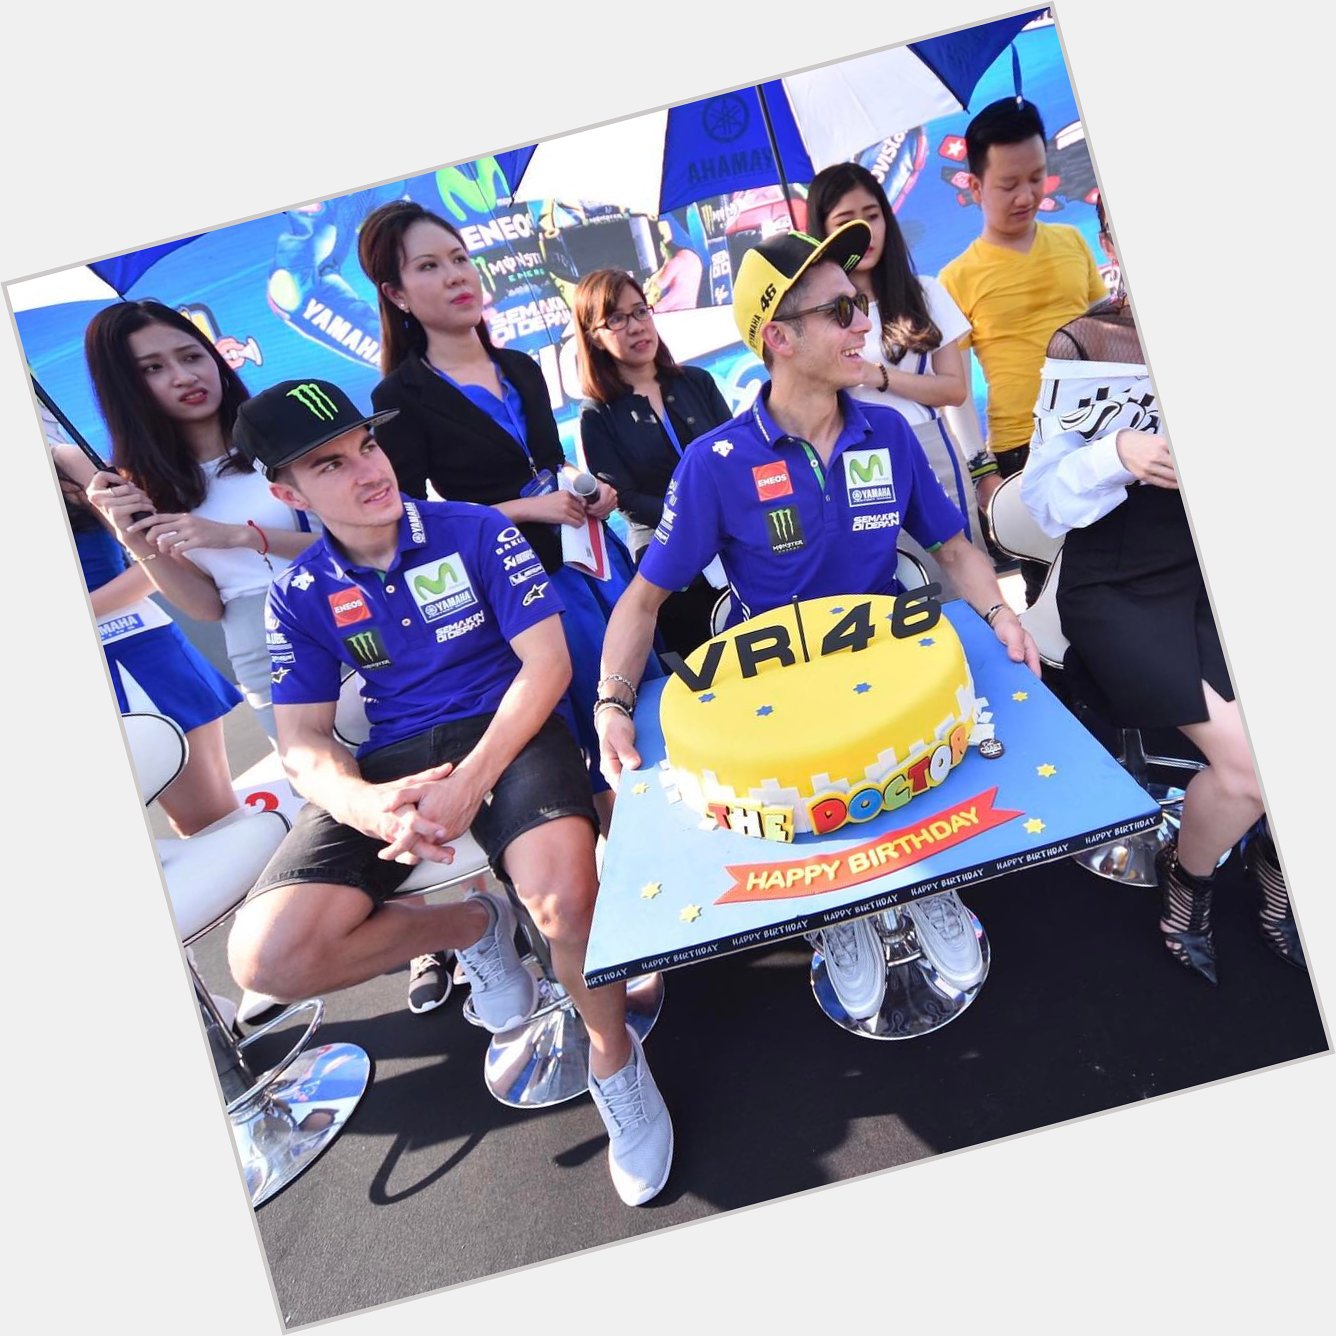 Happy birthday day Valentino Rossi  cc: 